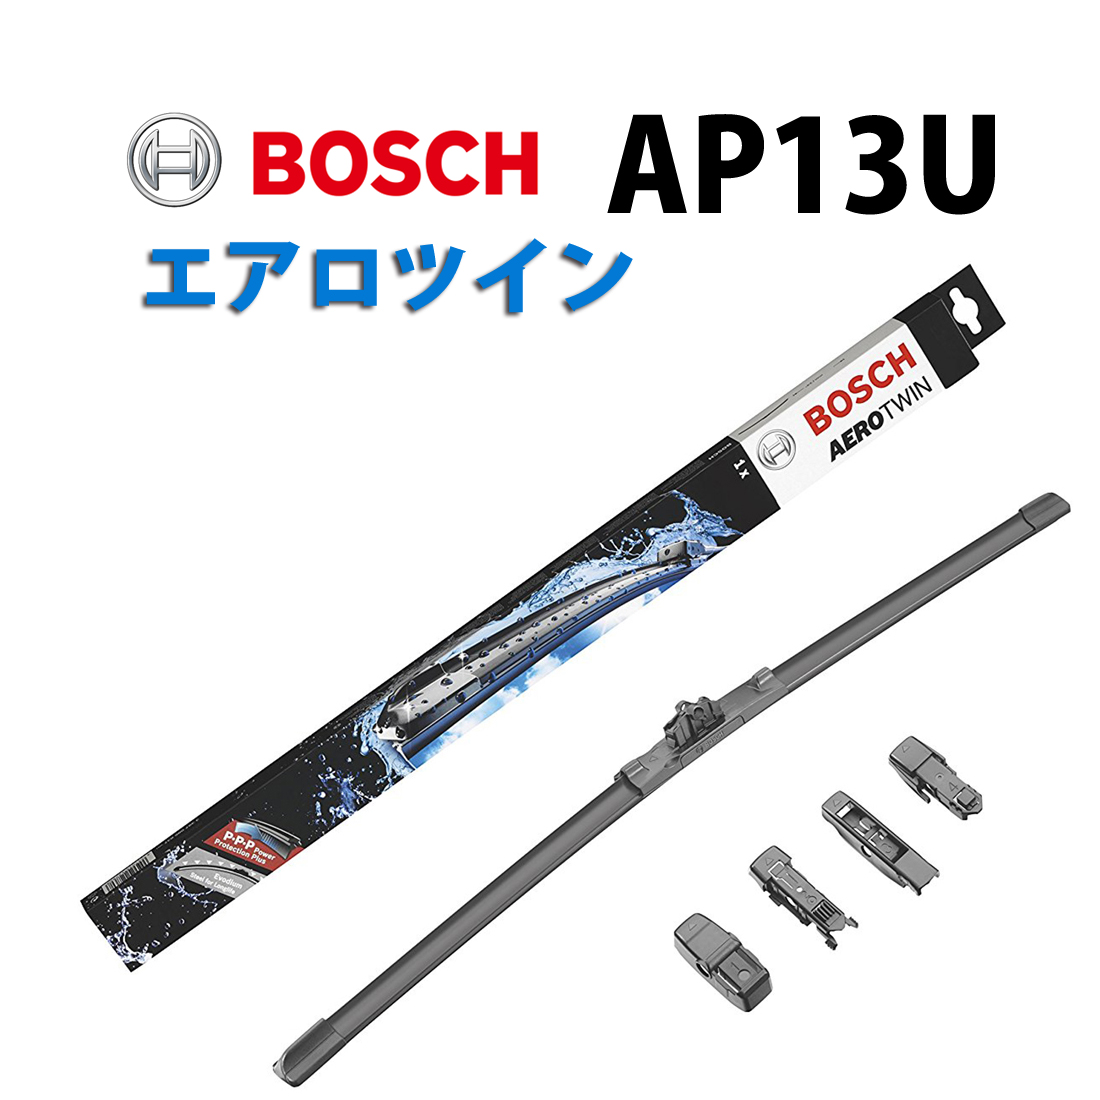 Bosch Wiper Blade Selection Chart